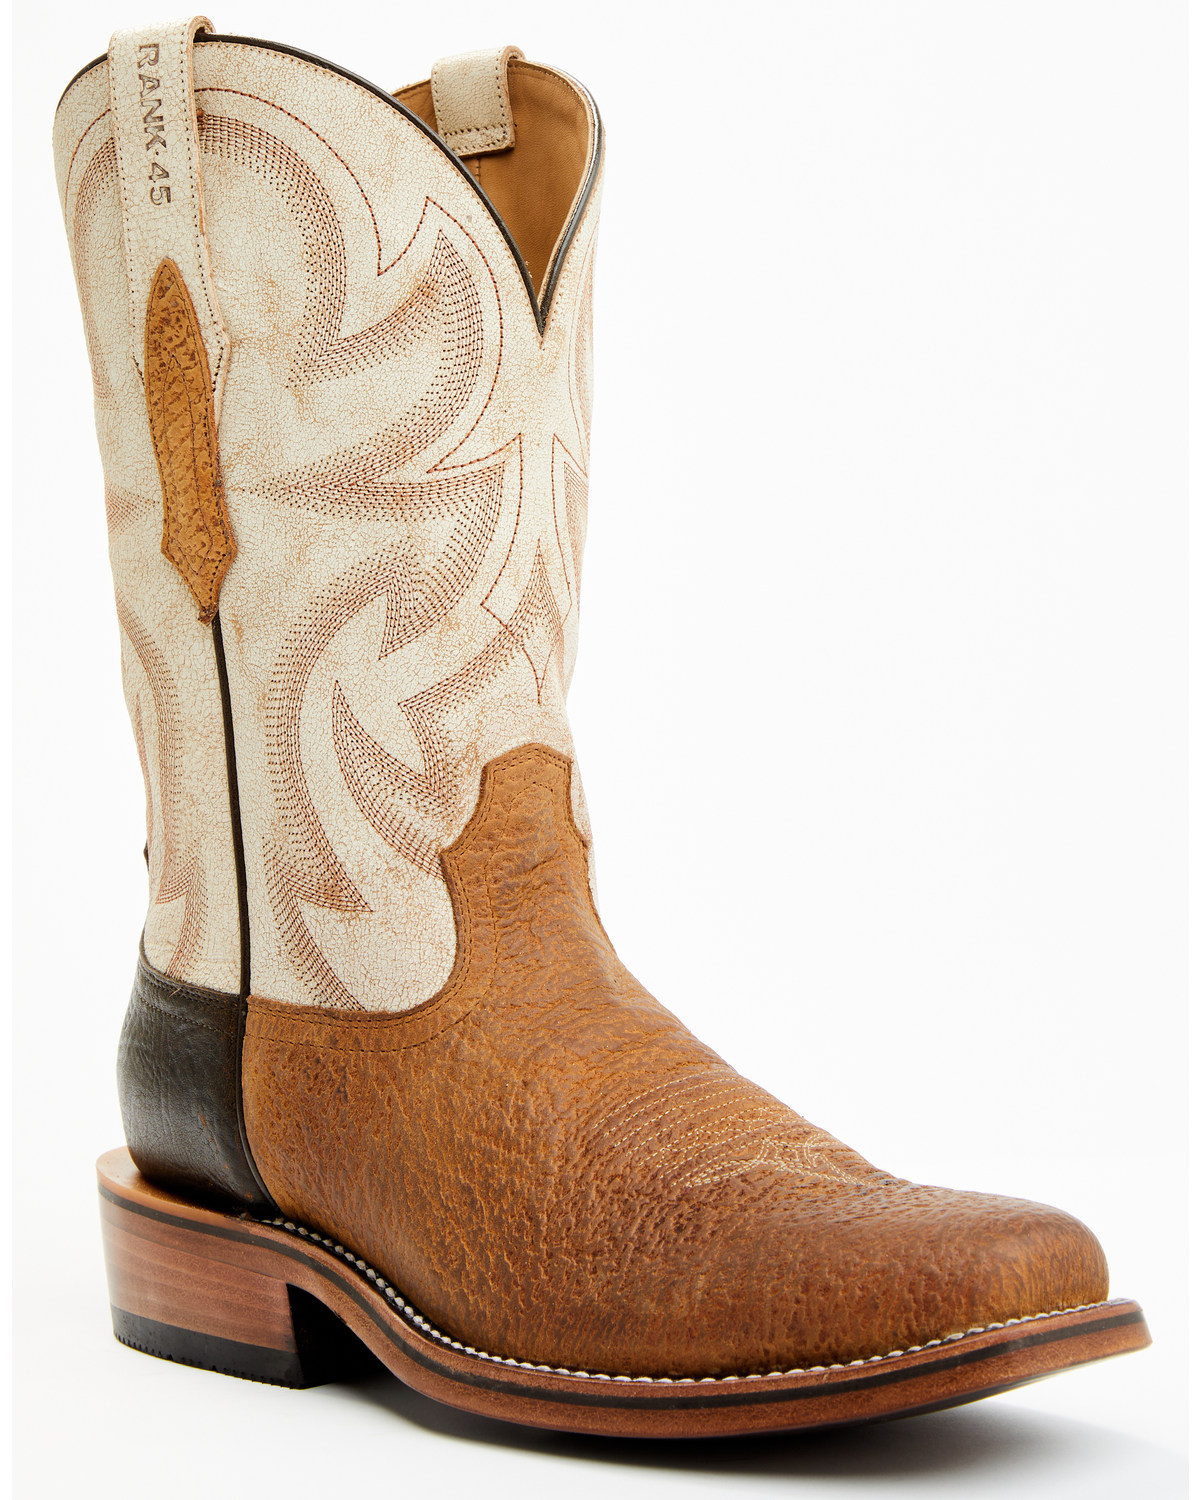 RANK 45® Men's Archer Western Boots - Square Toe